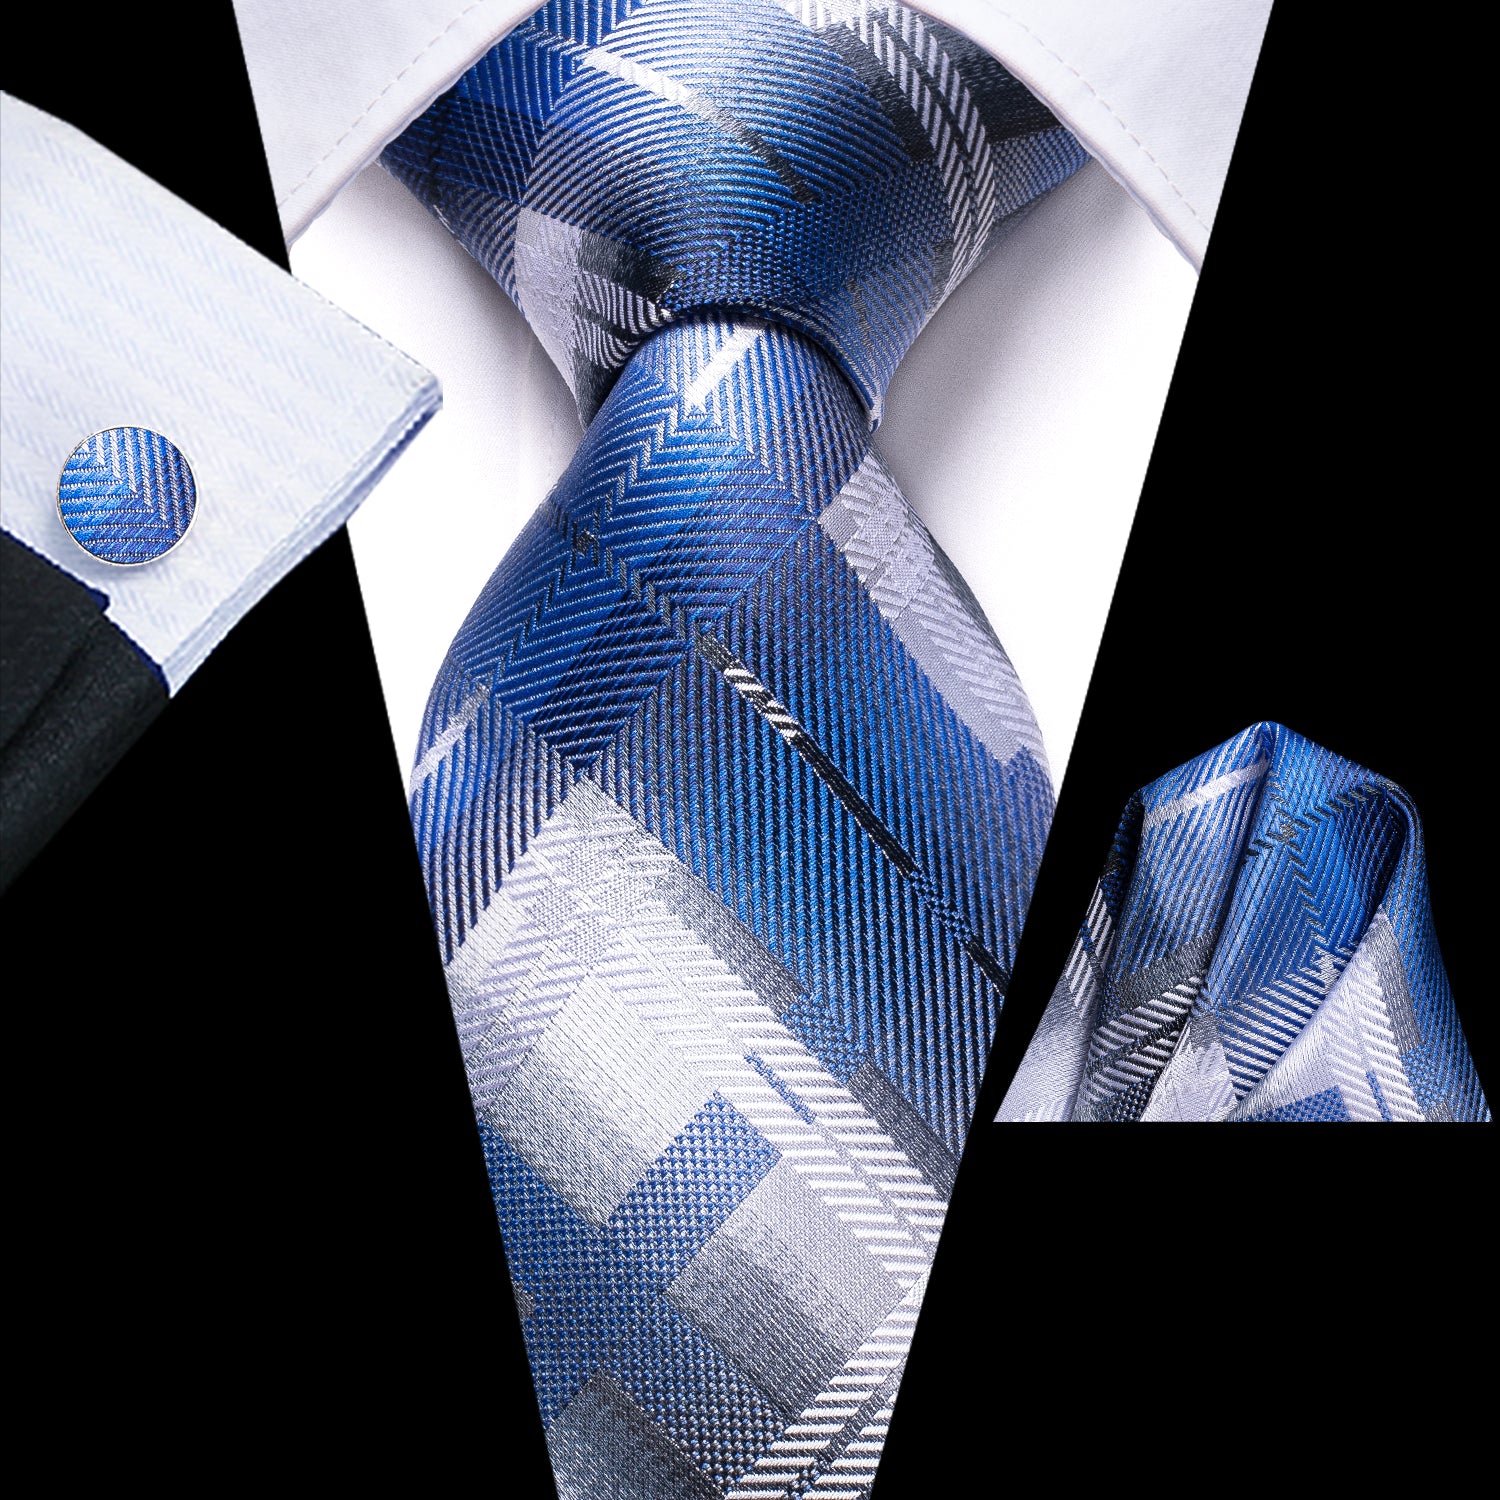 New Blue Grey Strip Tie Pocket Square Cufflinks Set